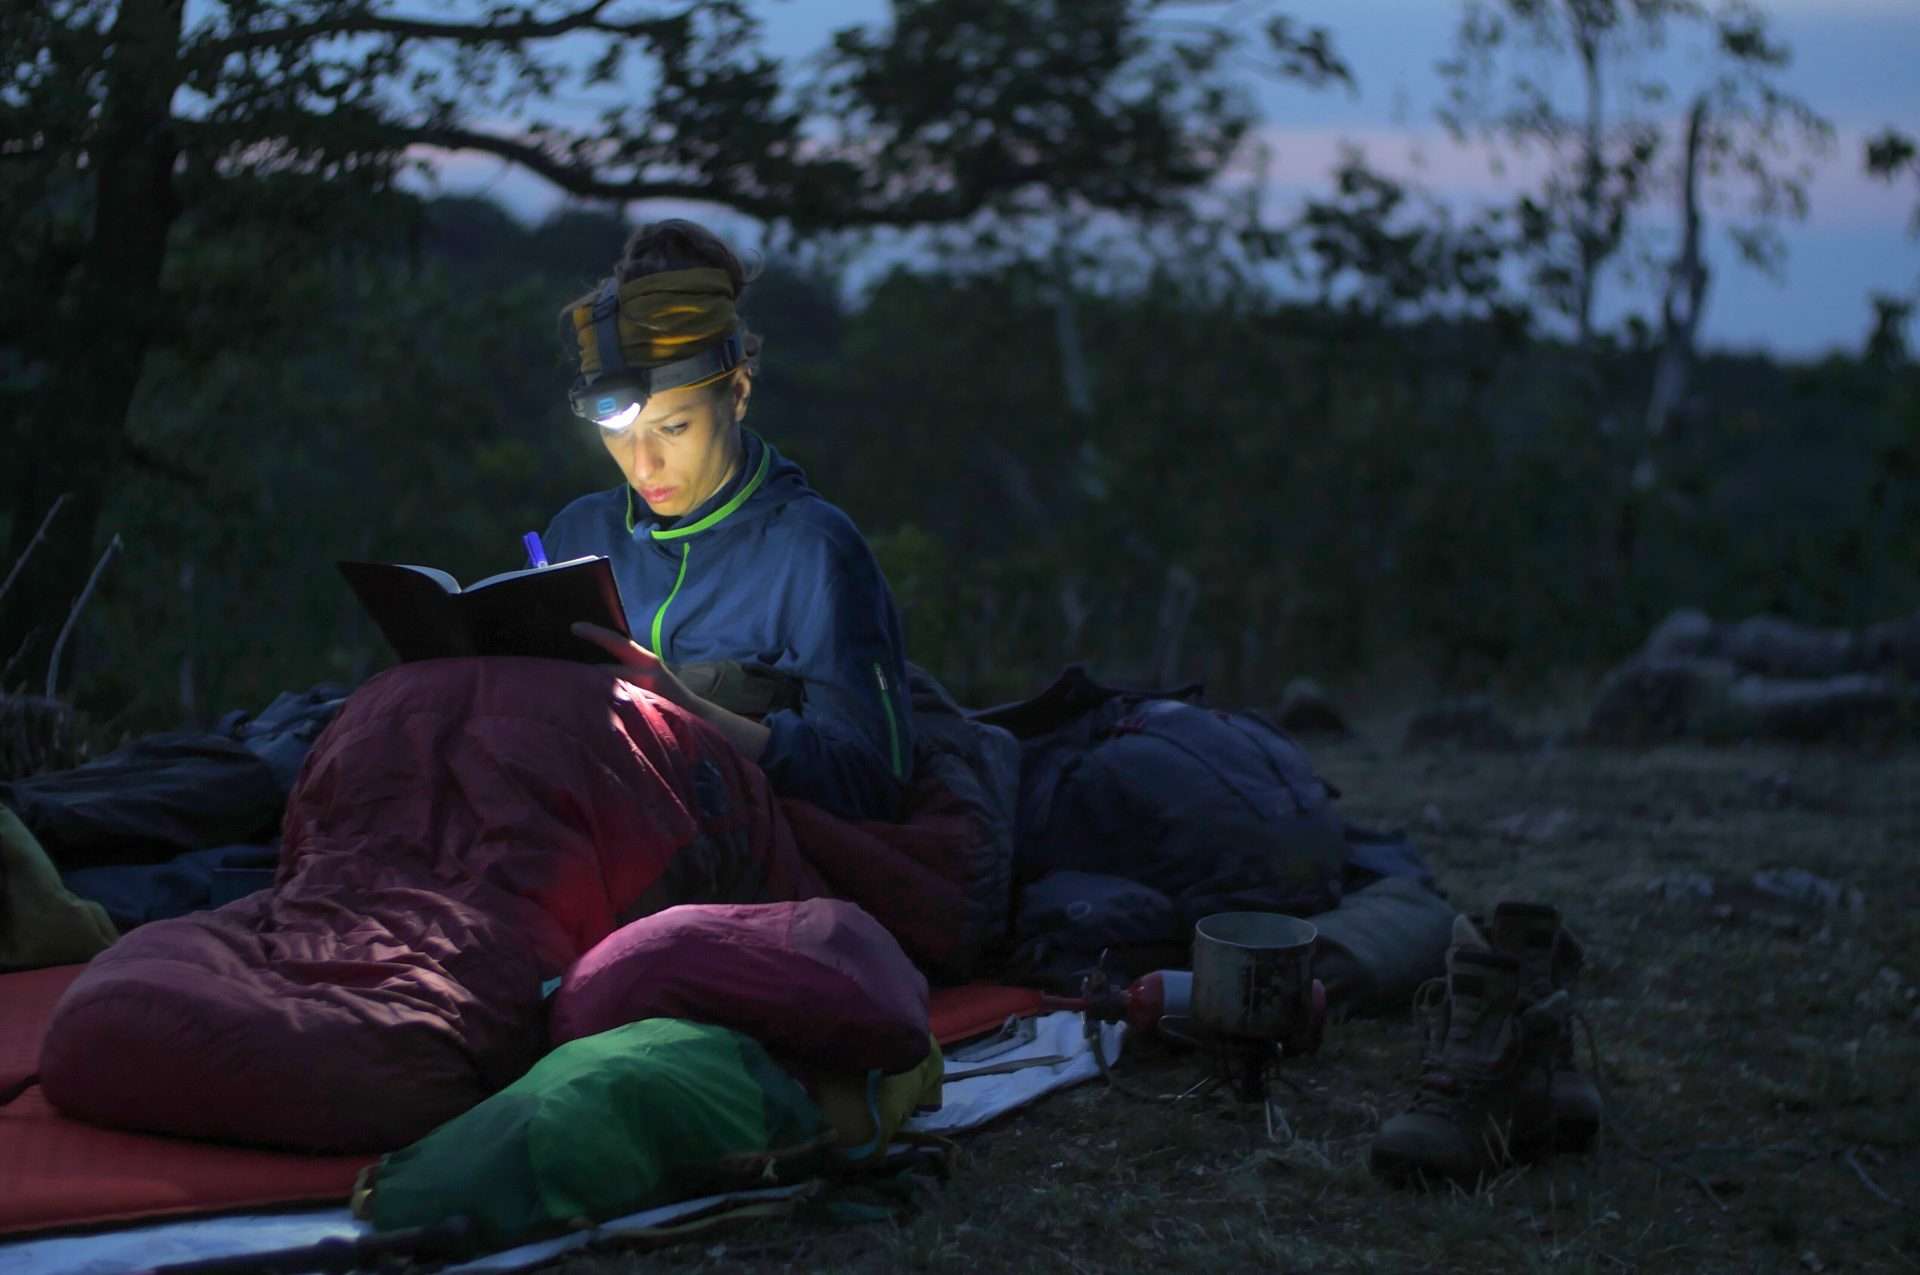 Woman using headlamp to read in sleeping bag